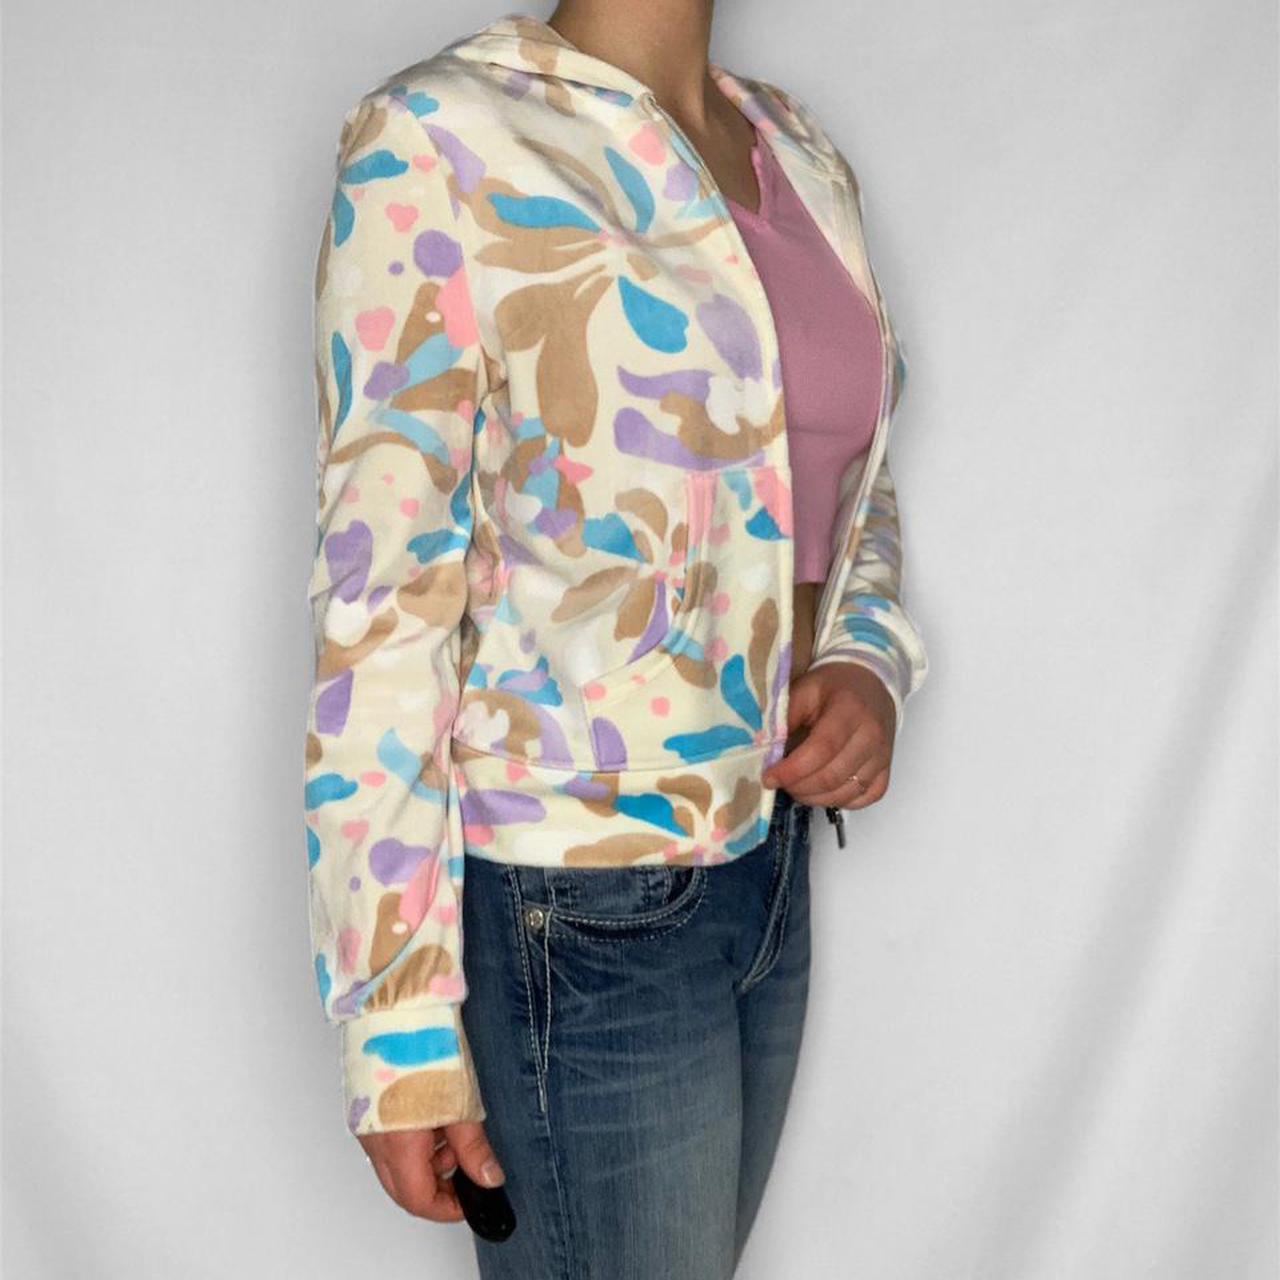 JUICY COUTURE vintage y2k velour patterned zip up hoodie (new with tags)